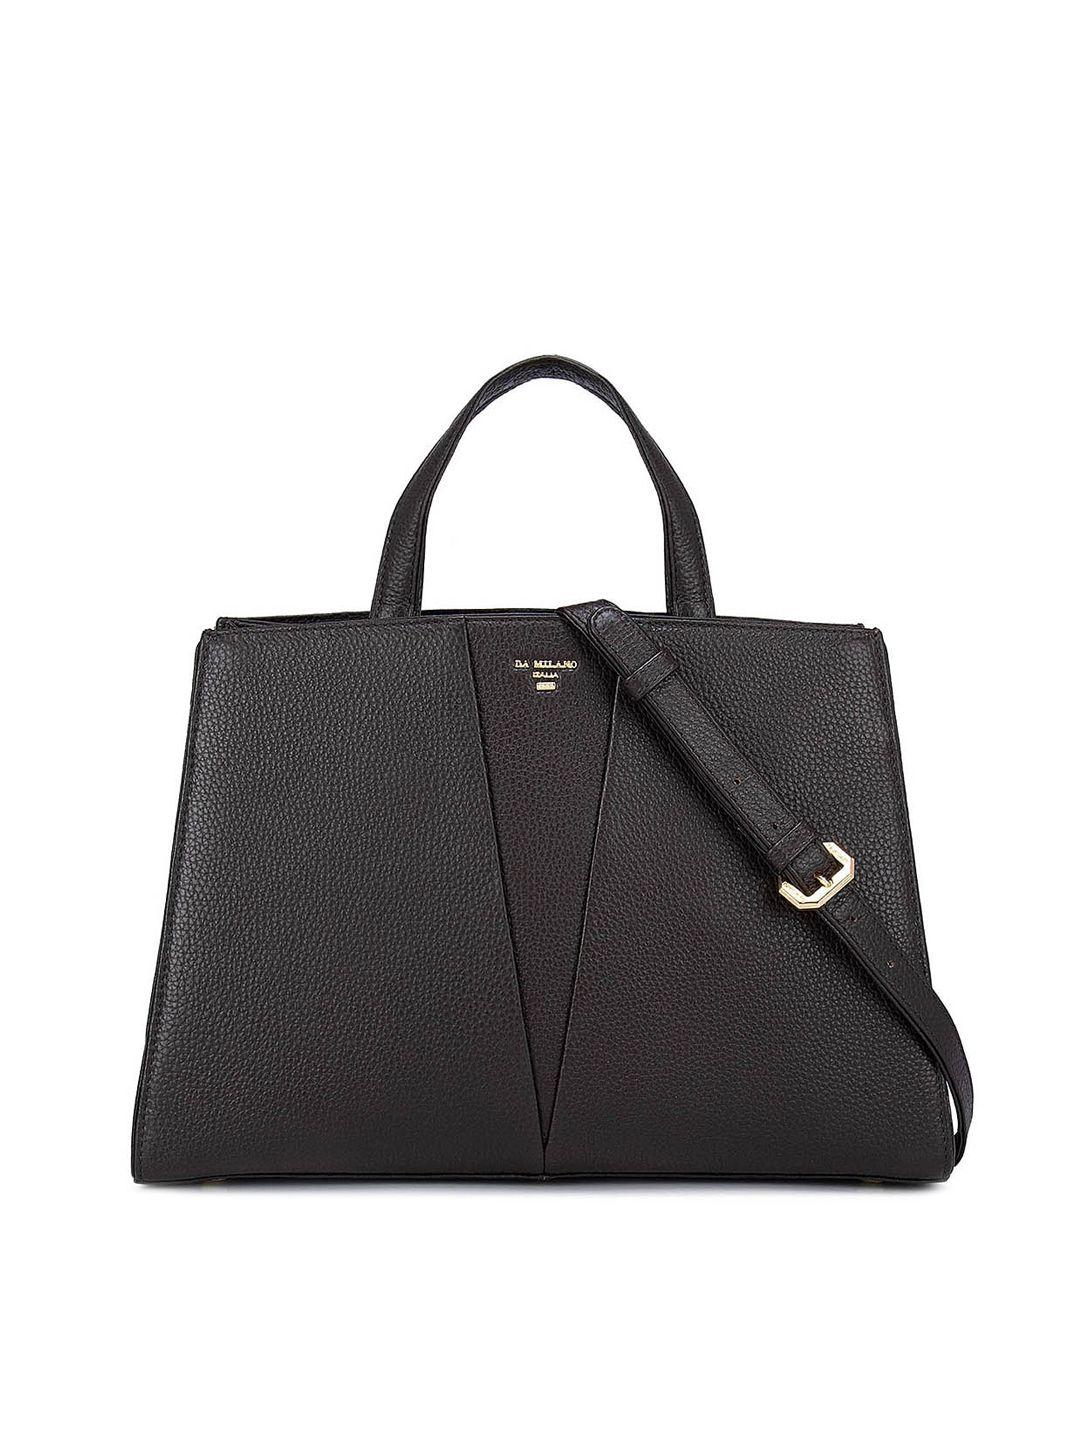 da milano black textured leather structured handheld bag